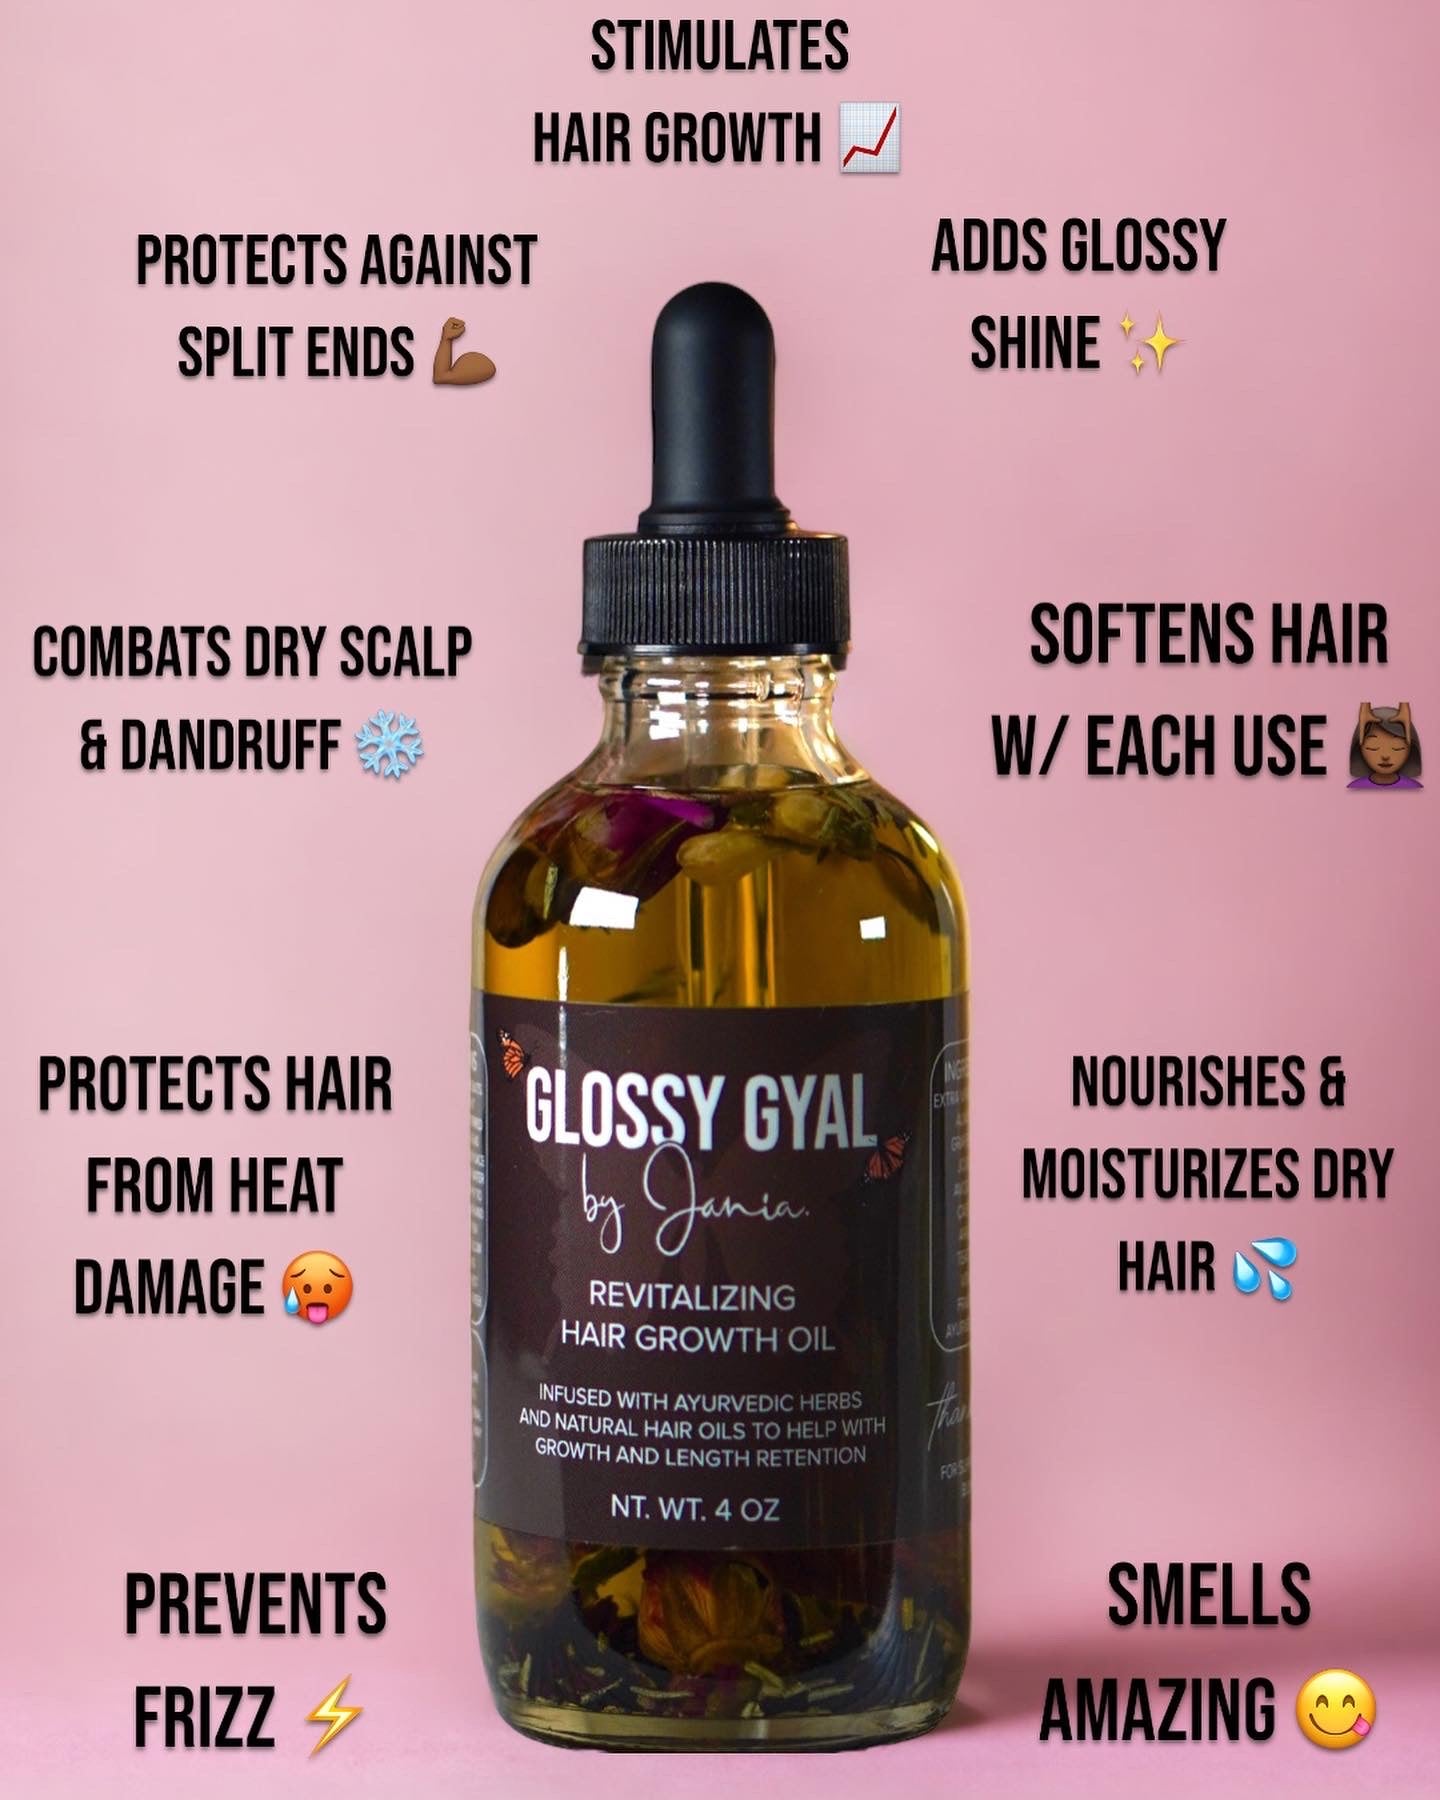 Glossy Gyal Revitalizing Hair Growth Oil